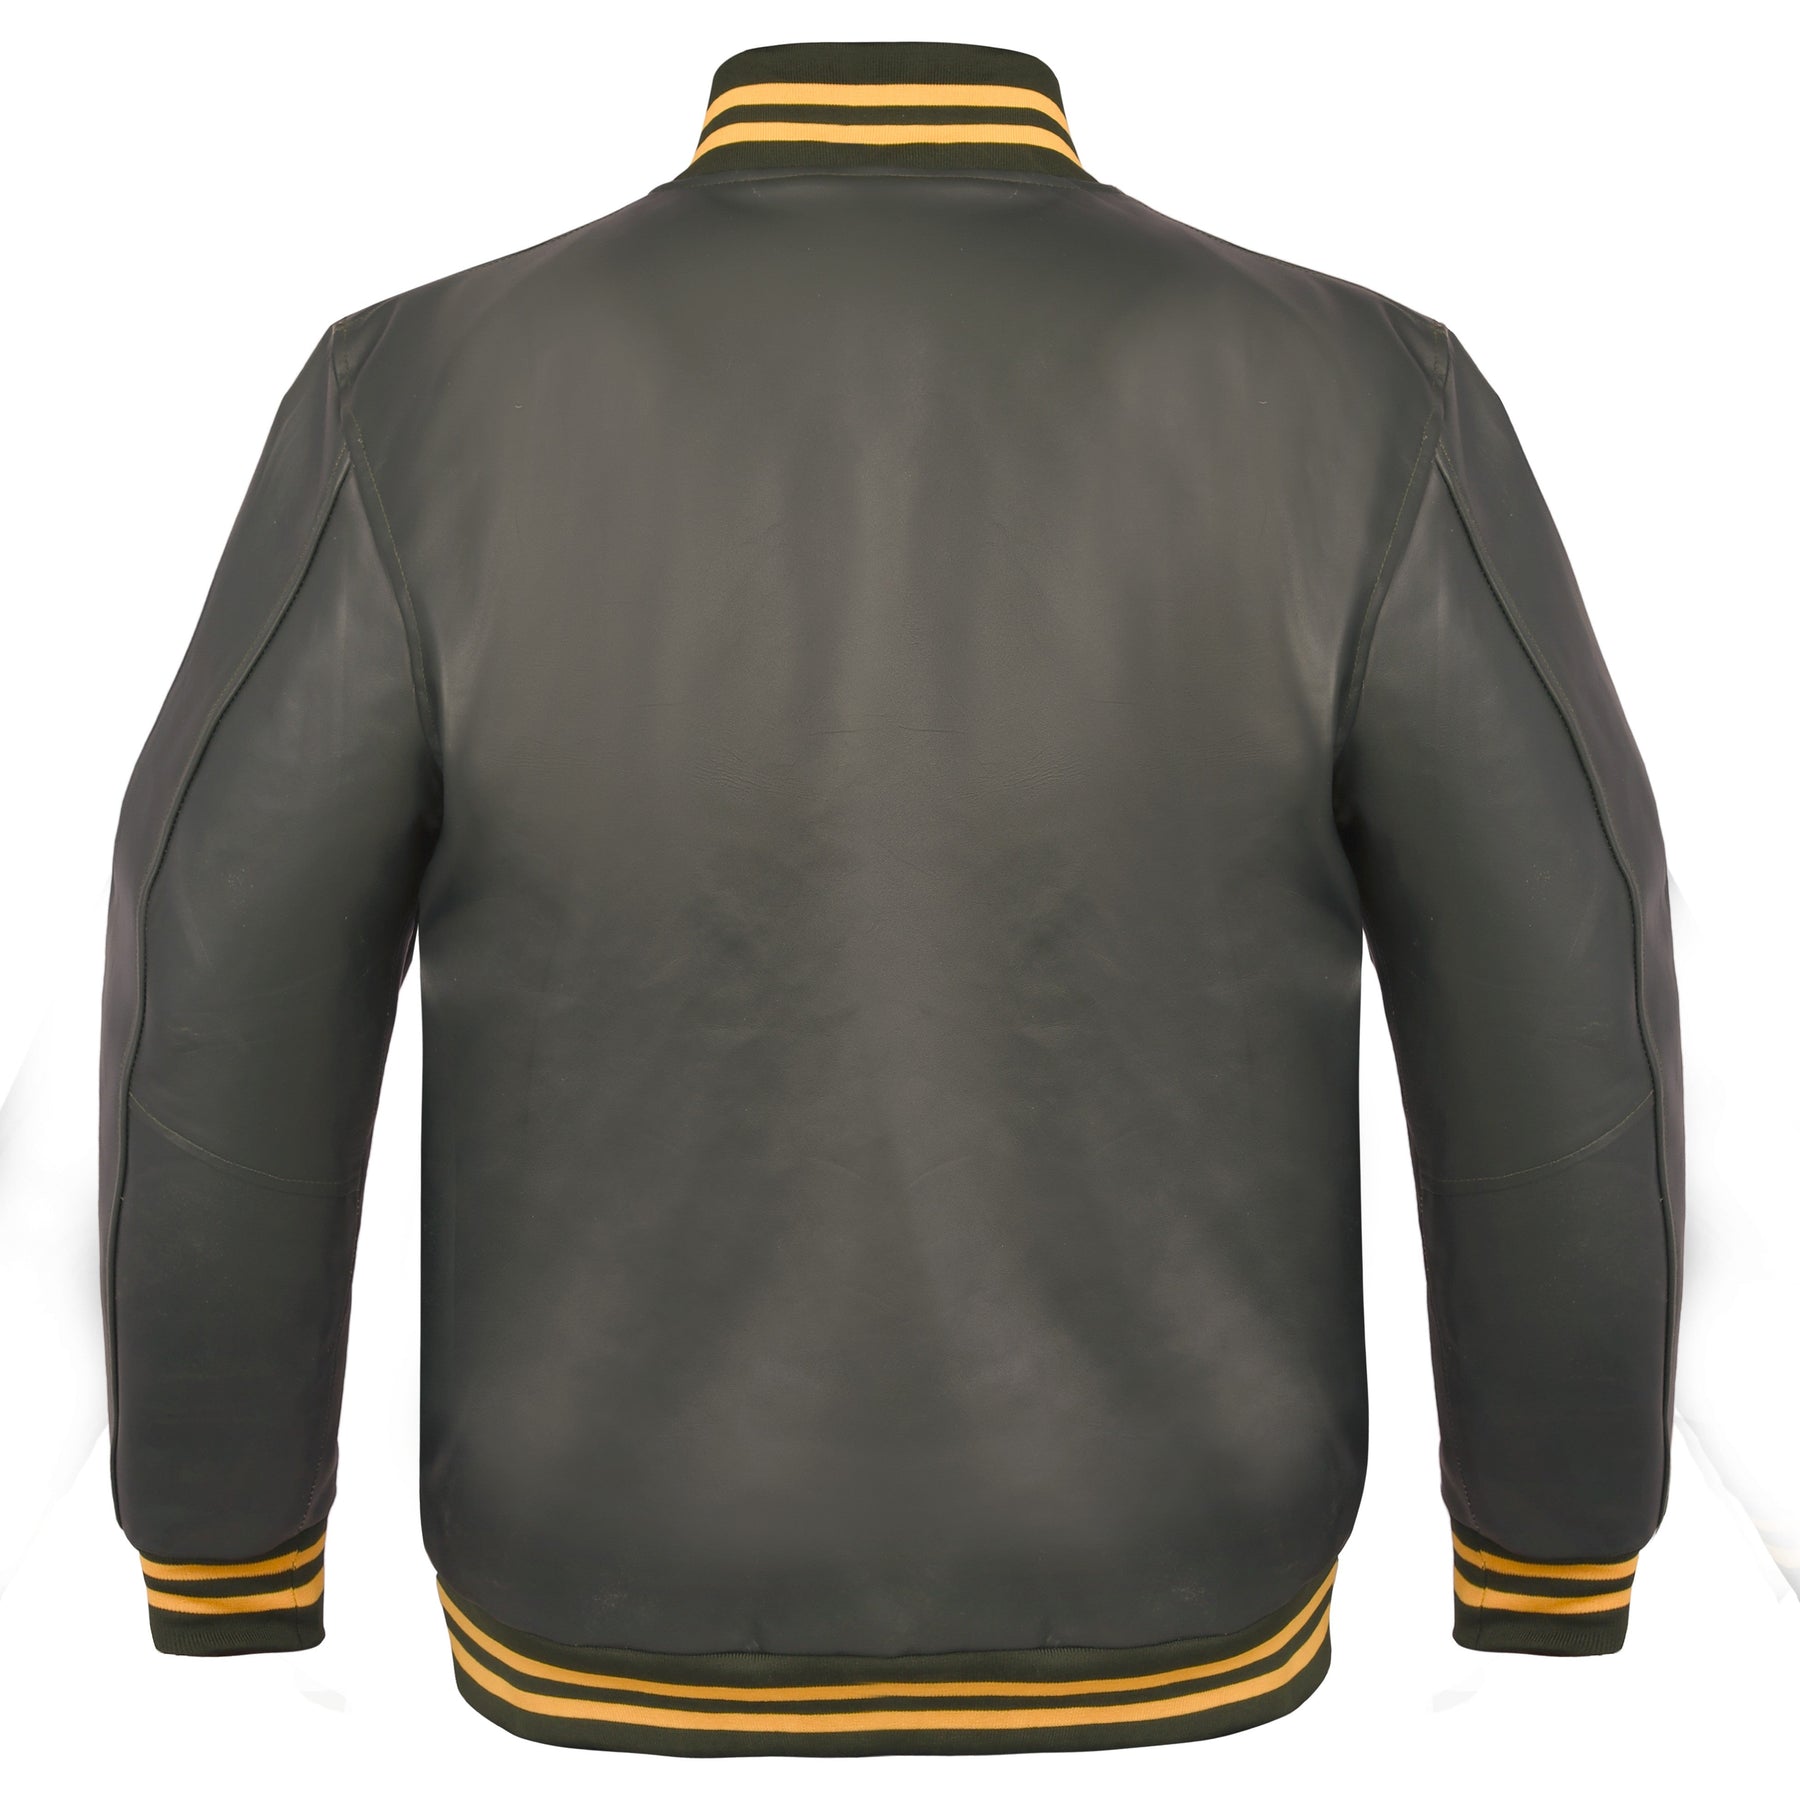 32nd Degree Scottish Rite Jacket - Leather With Customizable Gold Embroidery - Bricks Masons